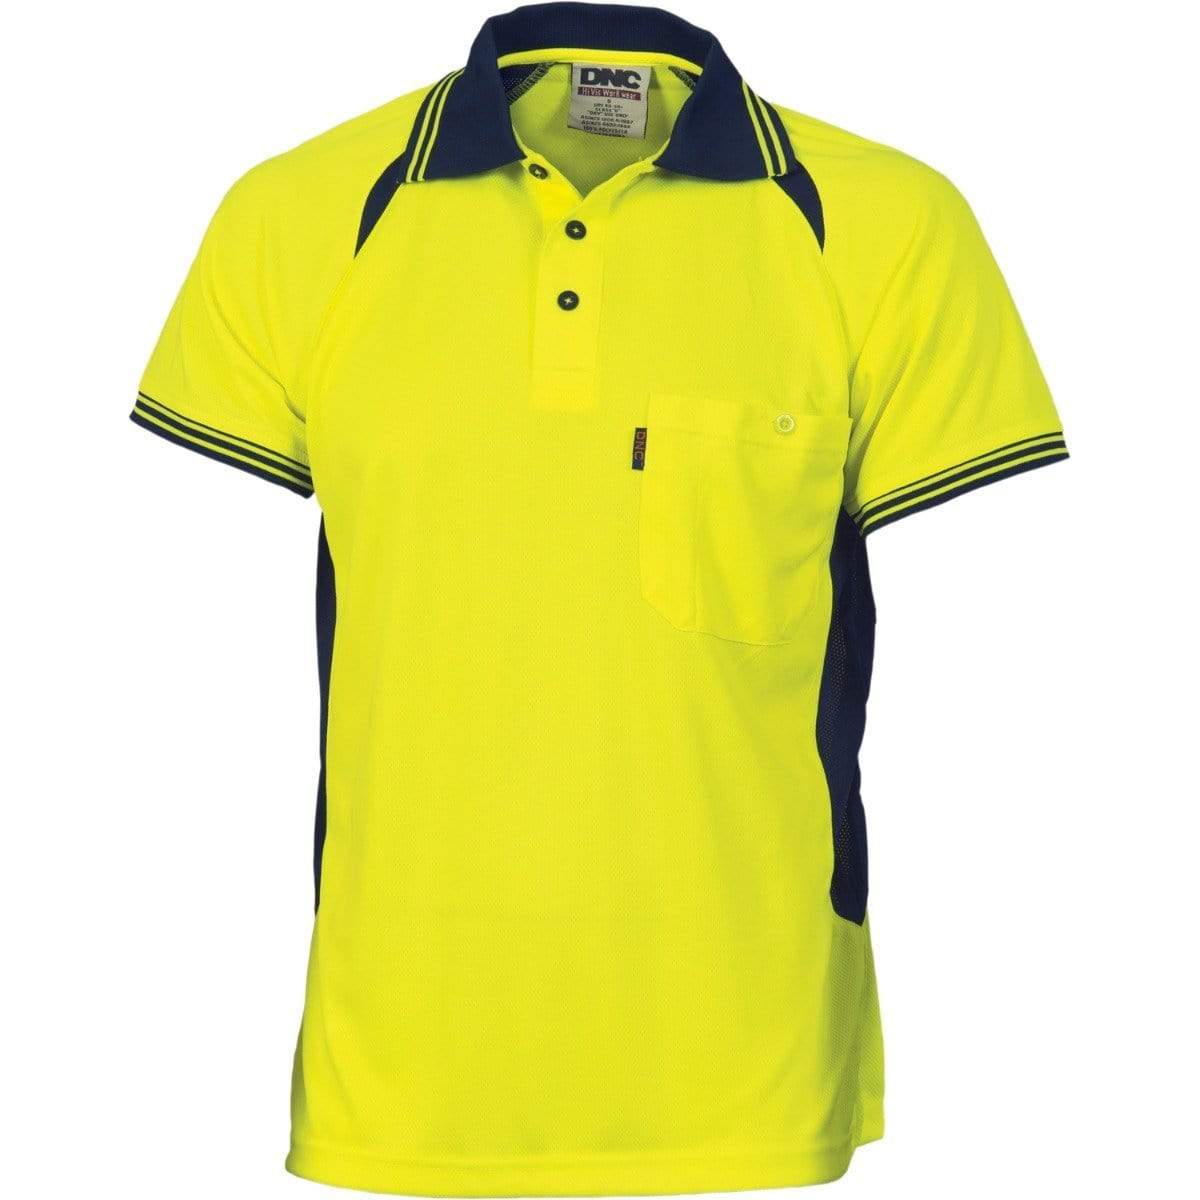 Dnc Workwear Cool-breeze Contrast Mesh Short Sleeve Polo - 3901 Work Wear DNC Workwear Yellow/Navy XS 